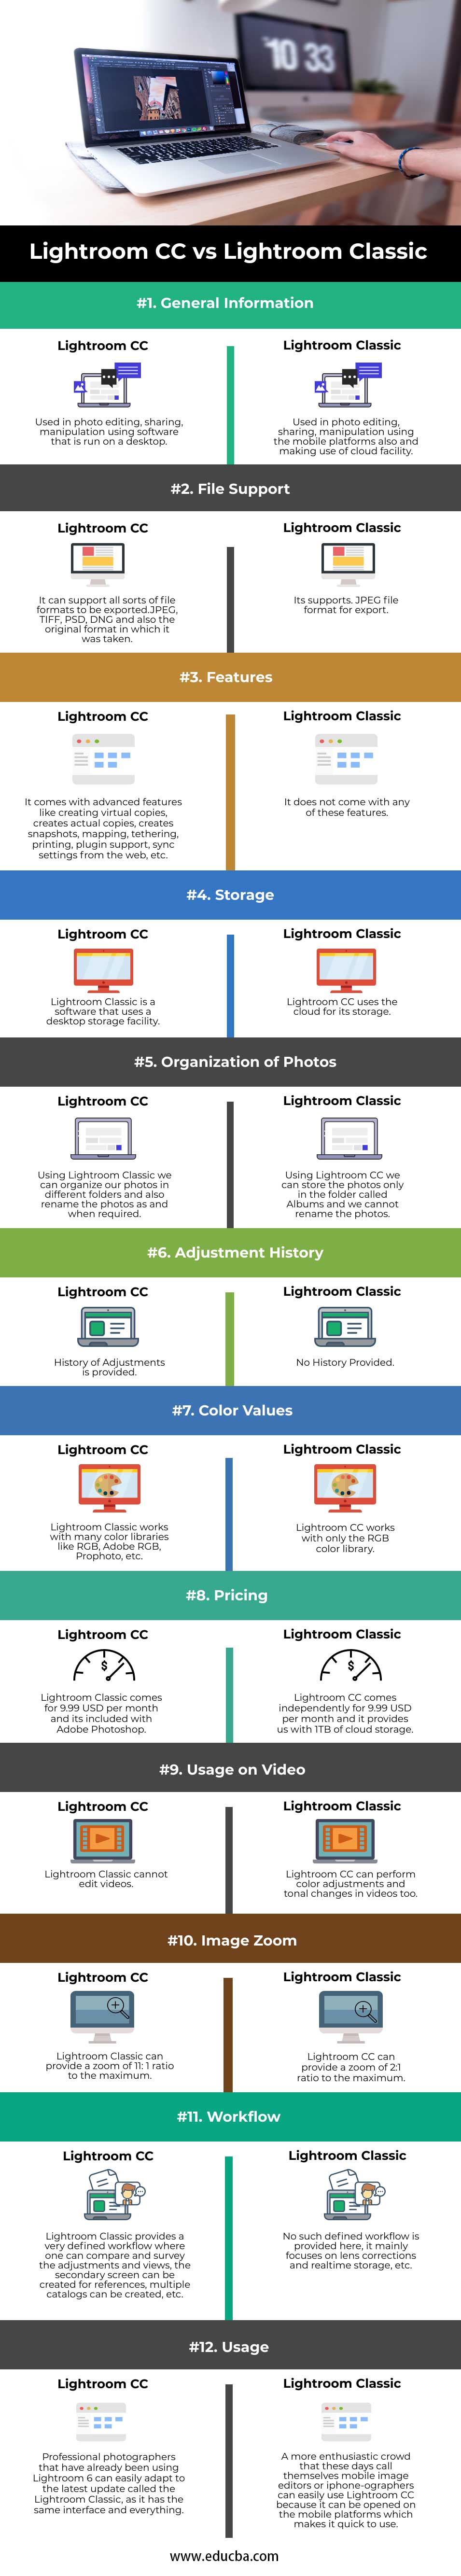 Lightroom-CC-vs-Lightroom-Classic-info